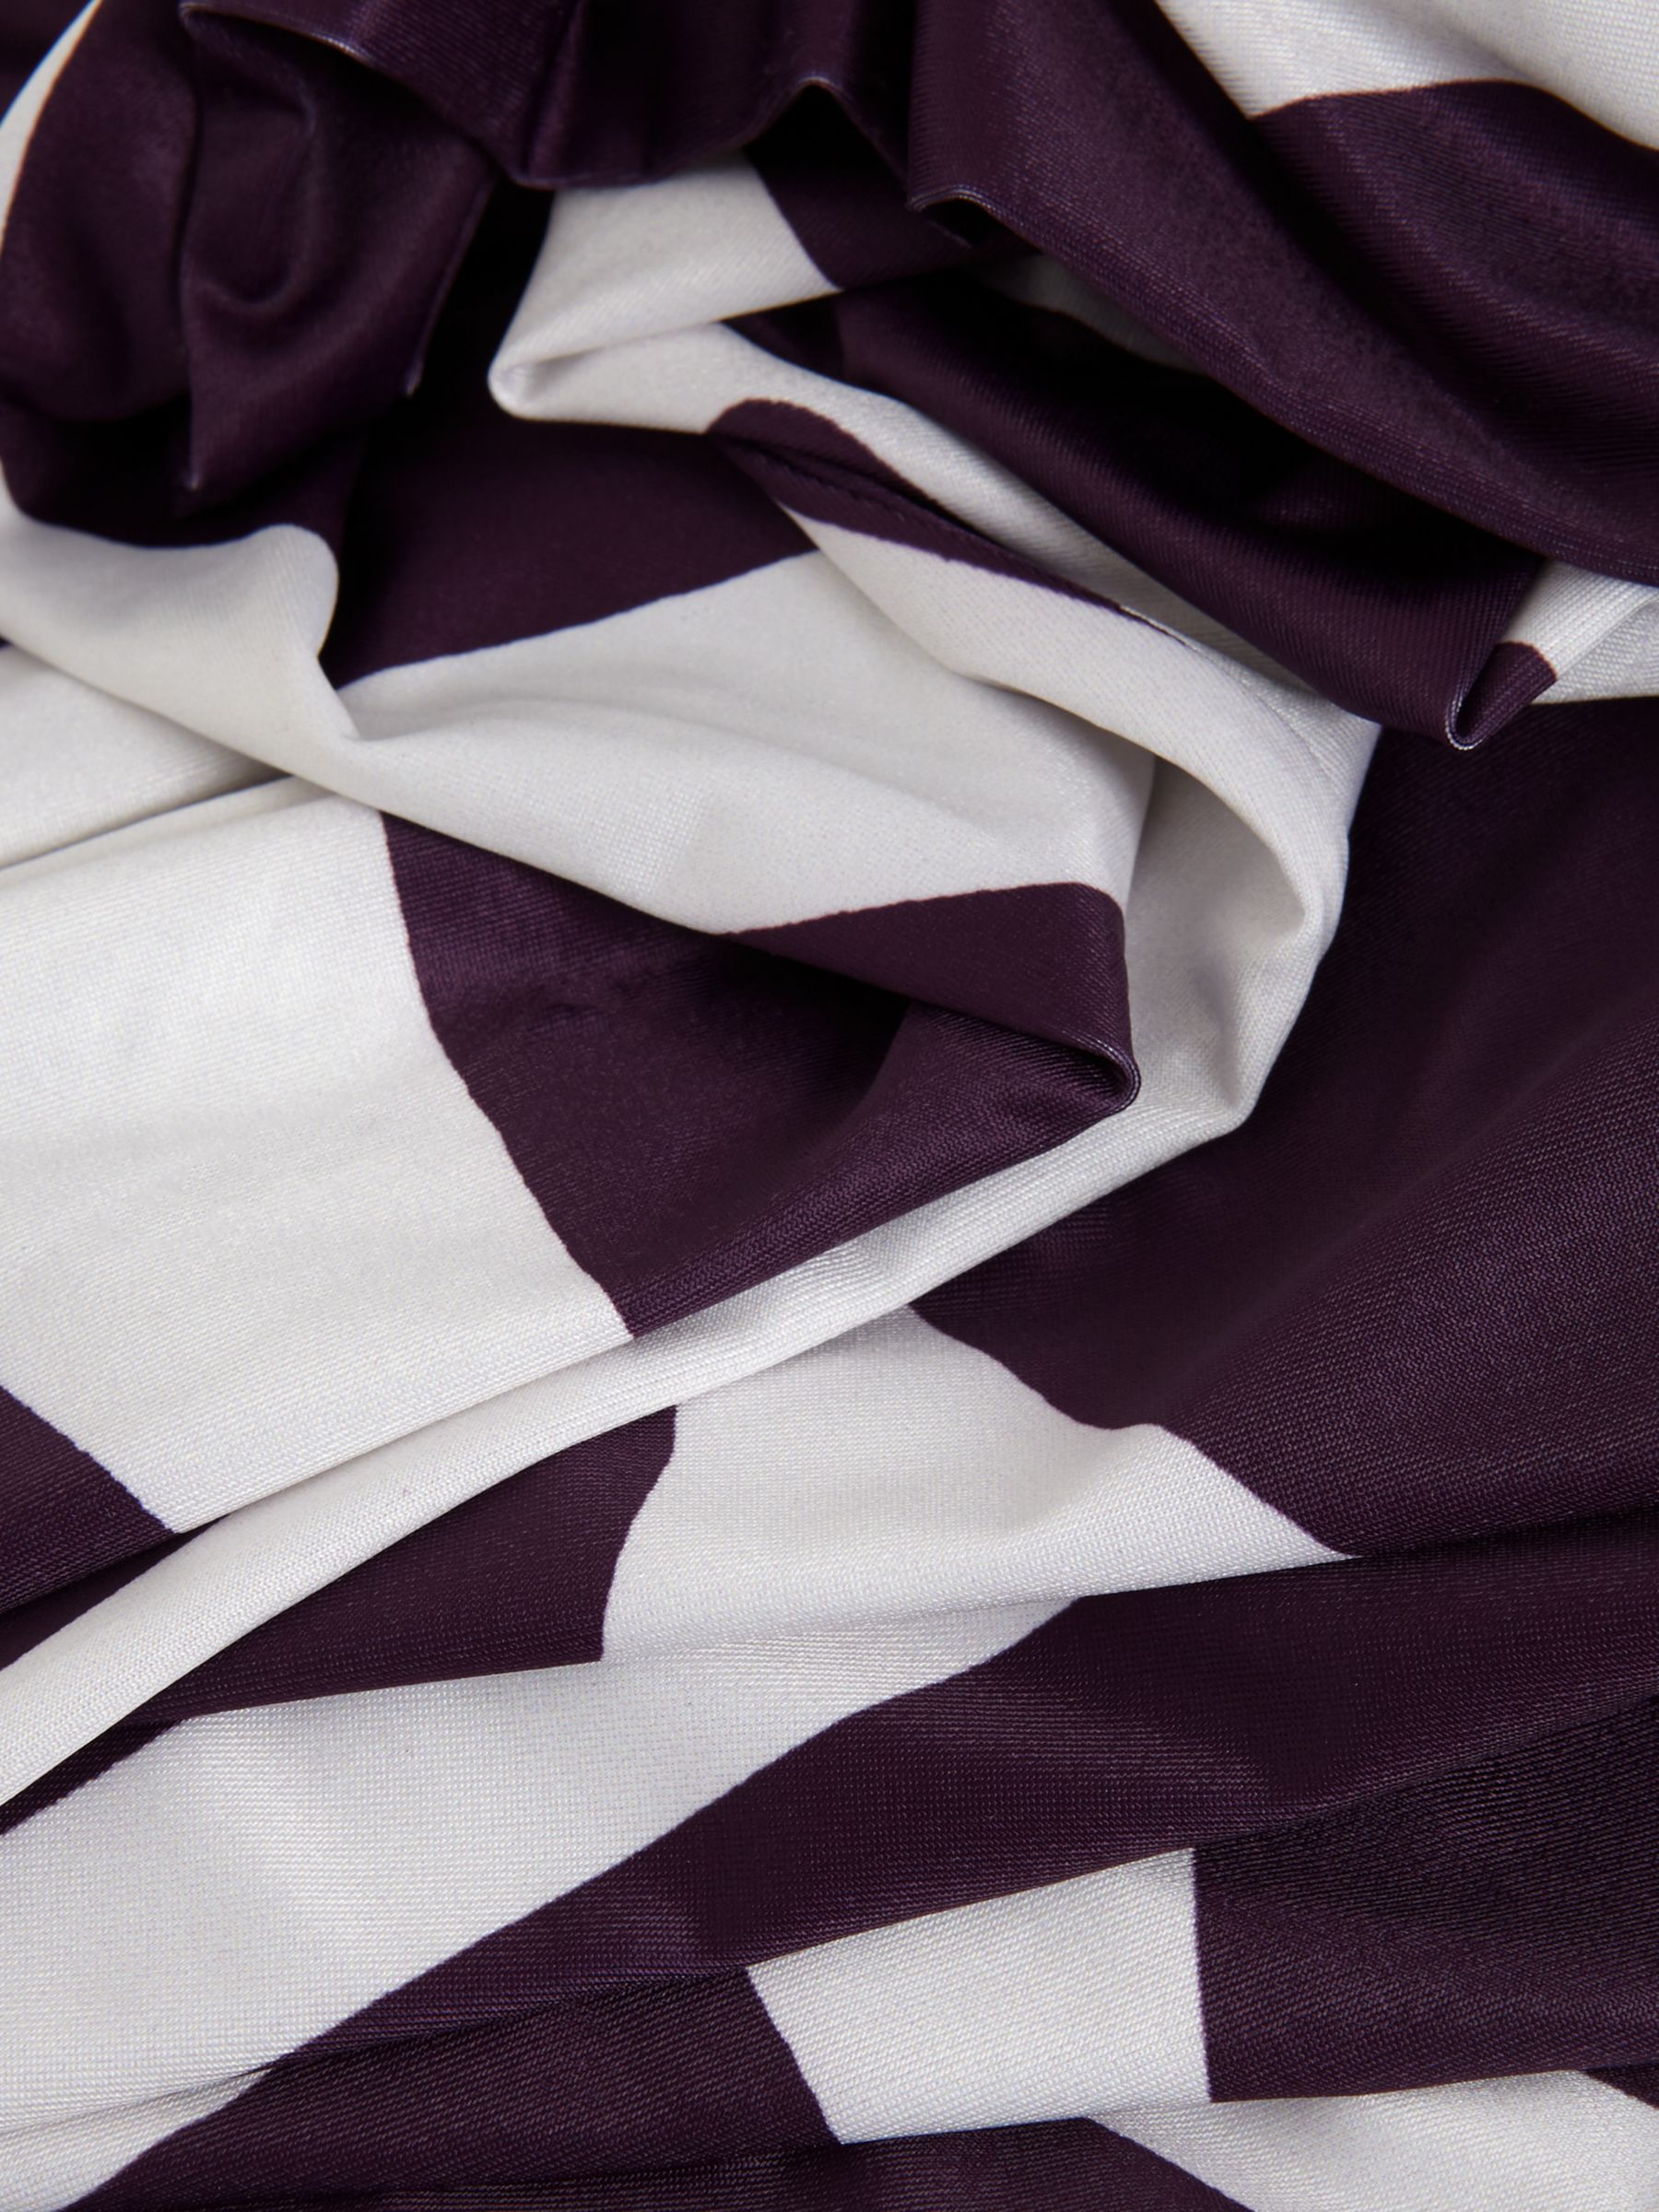 Phase Eight Palmer Leaf Maxi Dress, Purple/White, 16